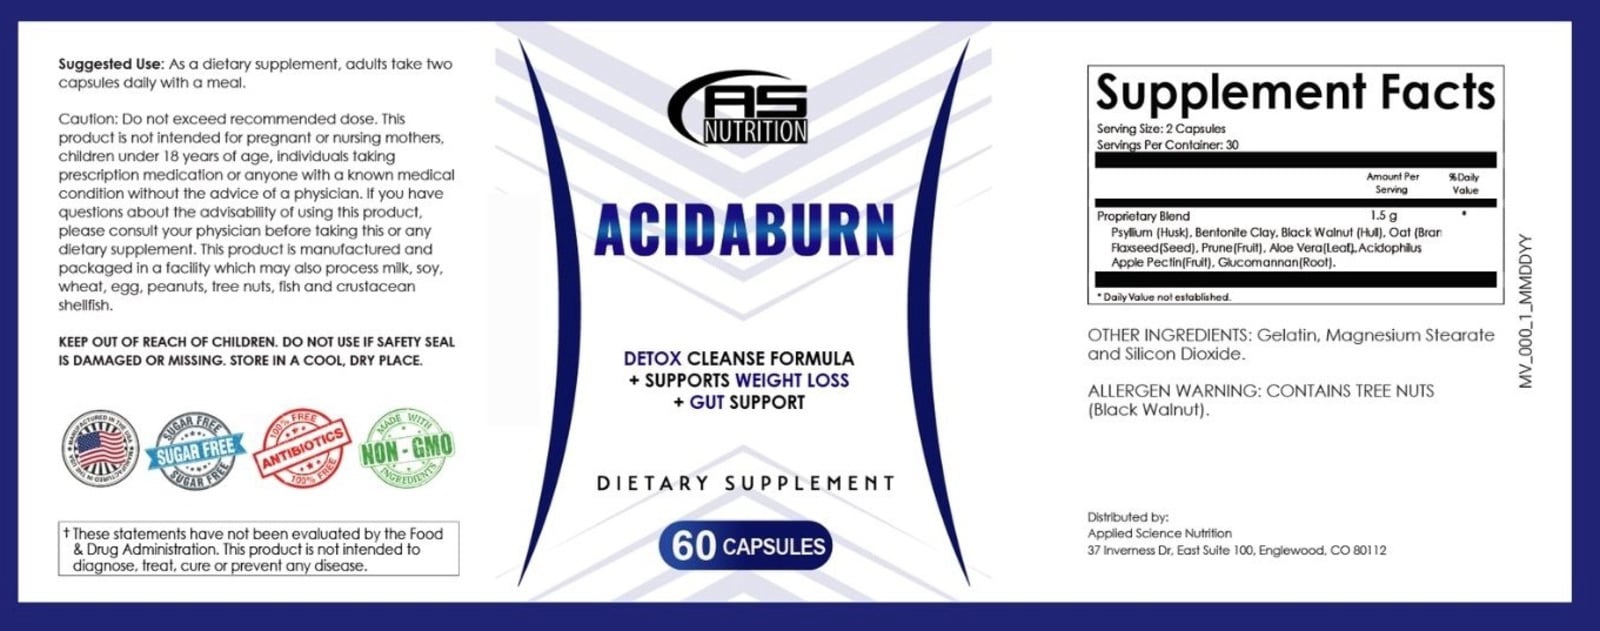 AcidaBurn_supplement_facts